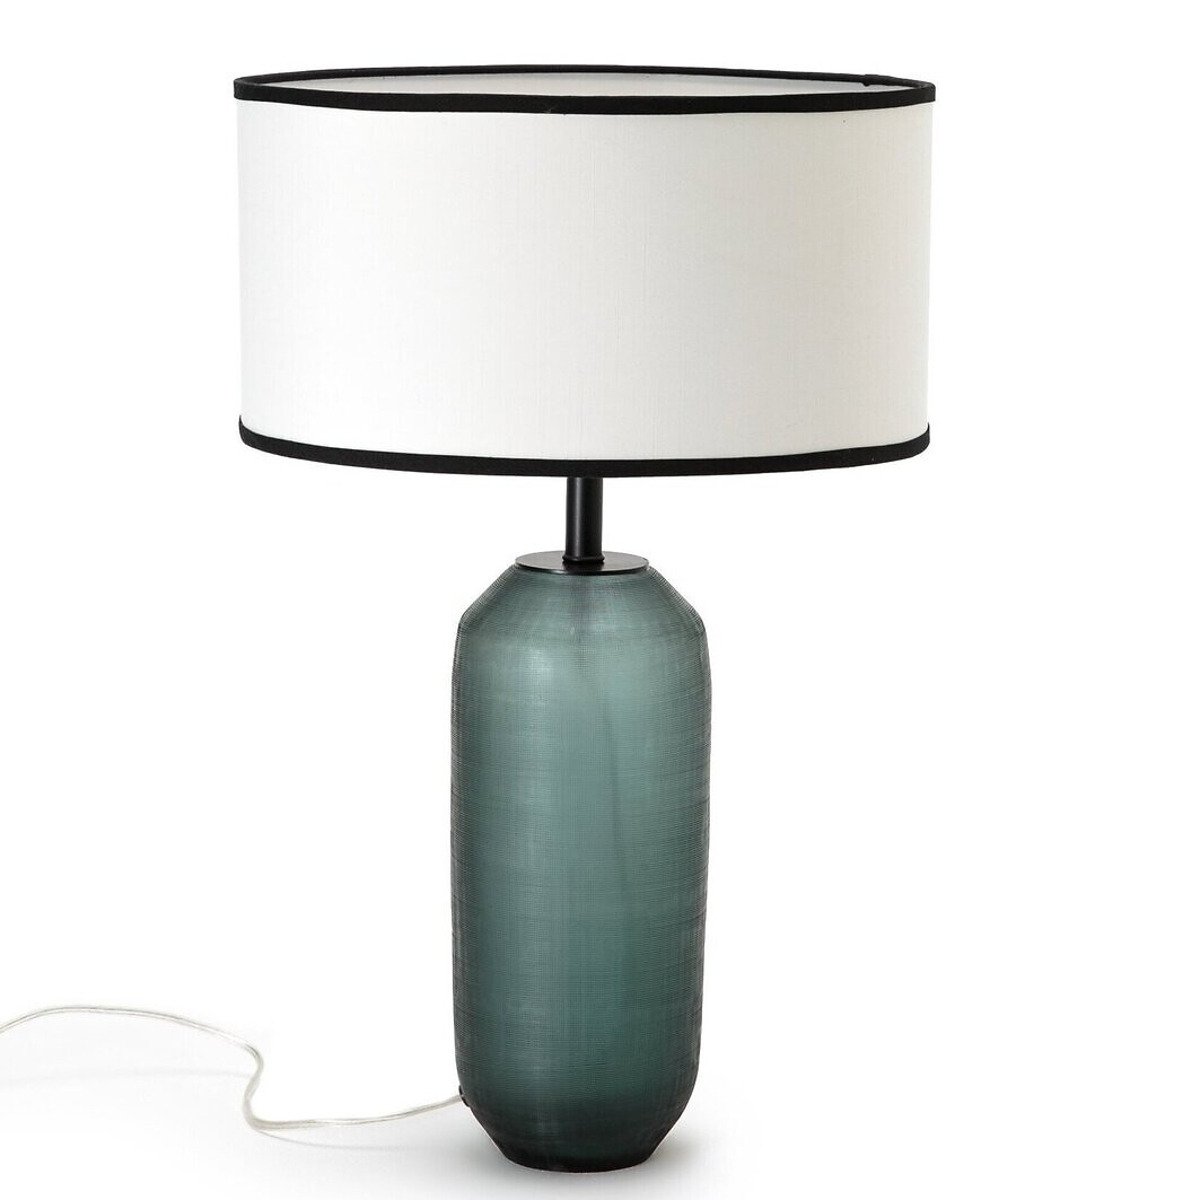 Gotuko Glass and Cotton Table Lamp - image 1